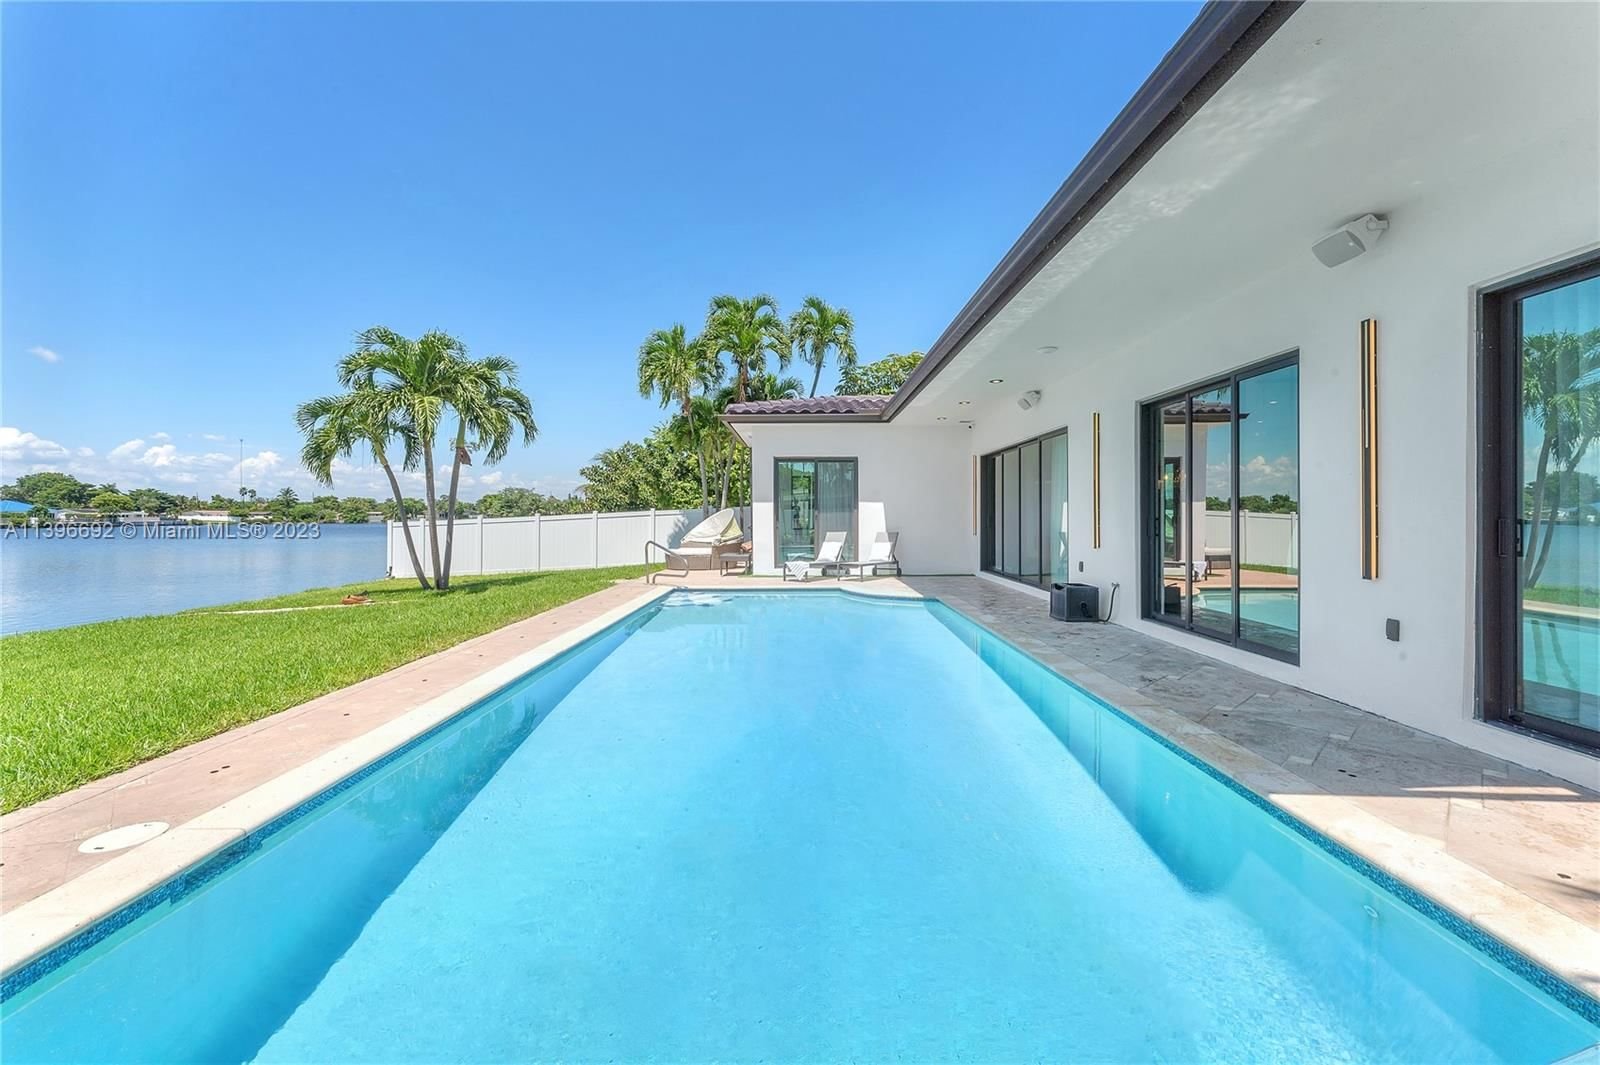 Real estate property located at 21100 25th Ct, Miami-Dade County, Miami, FL